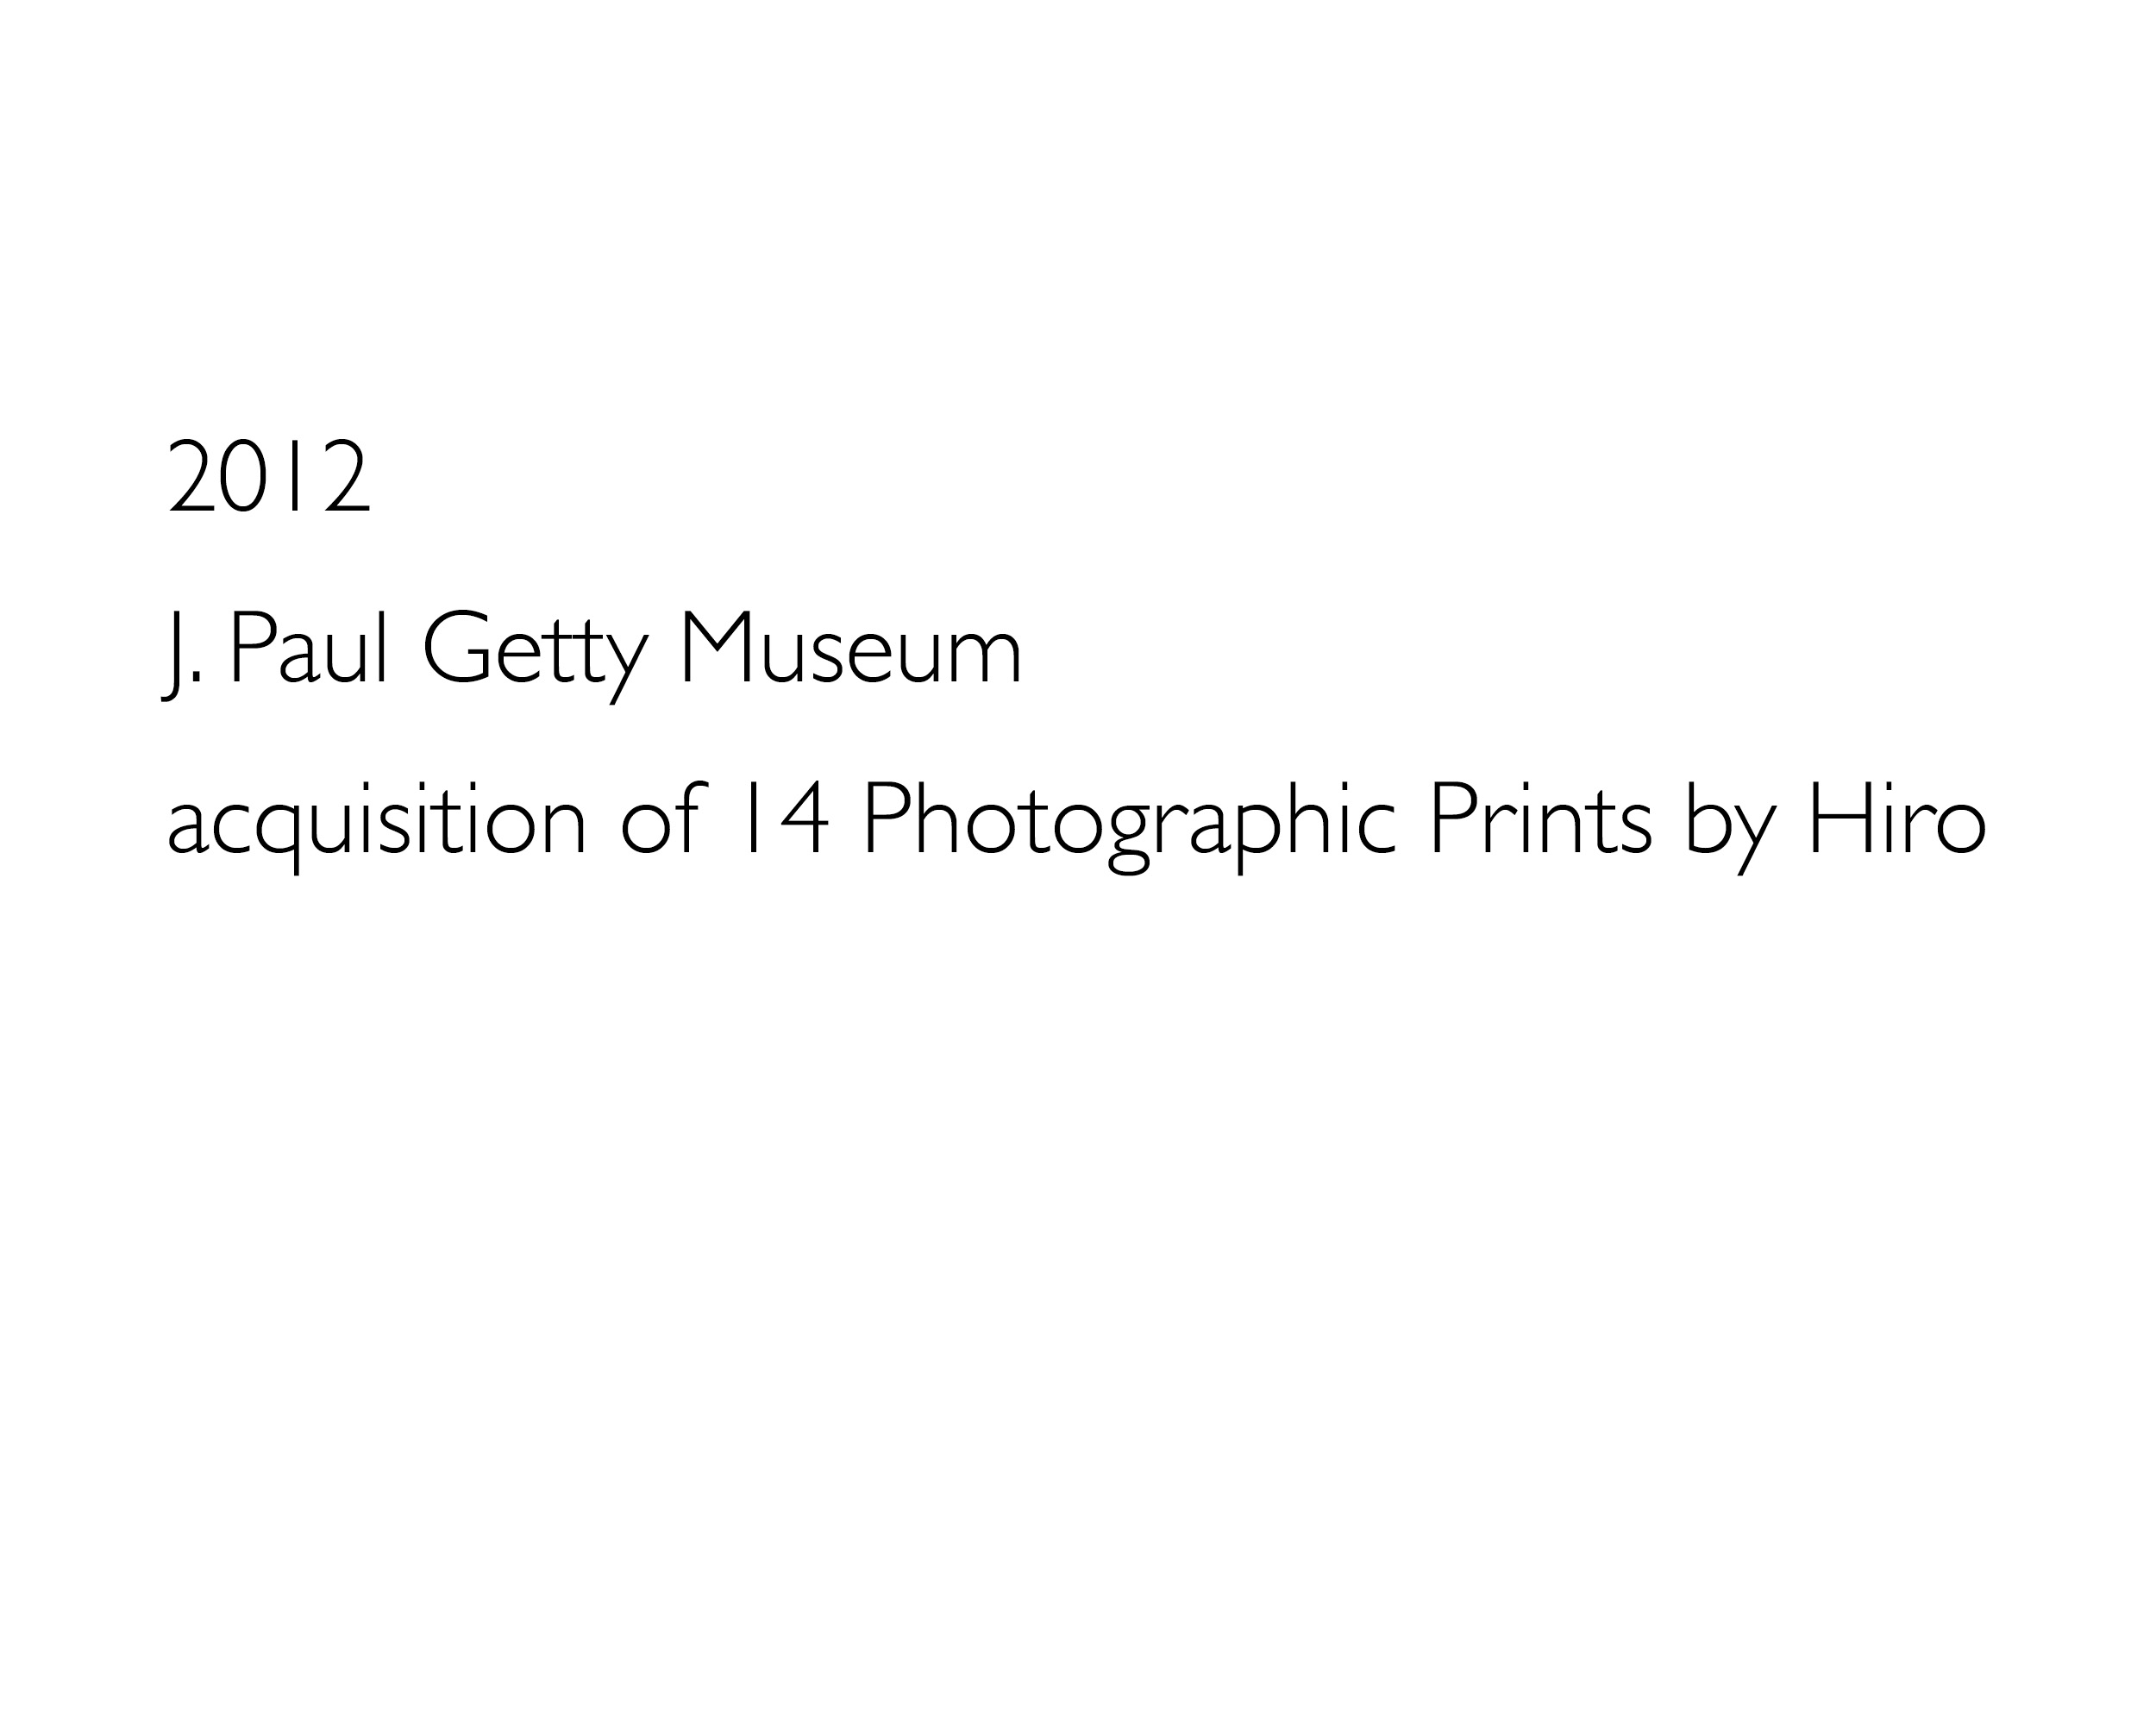 HIRO, J. Paul Getty Museum Print Acquisition, 2012